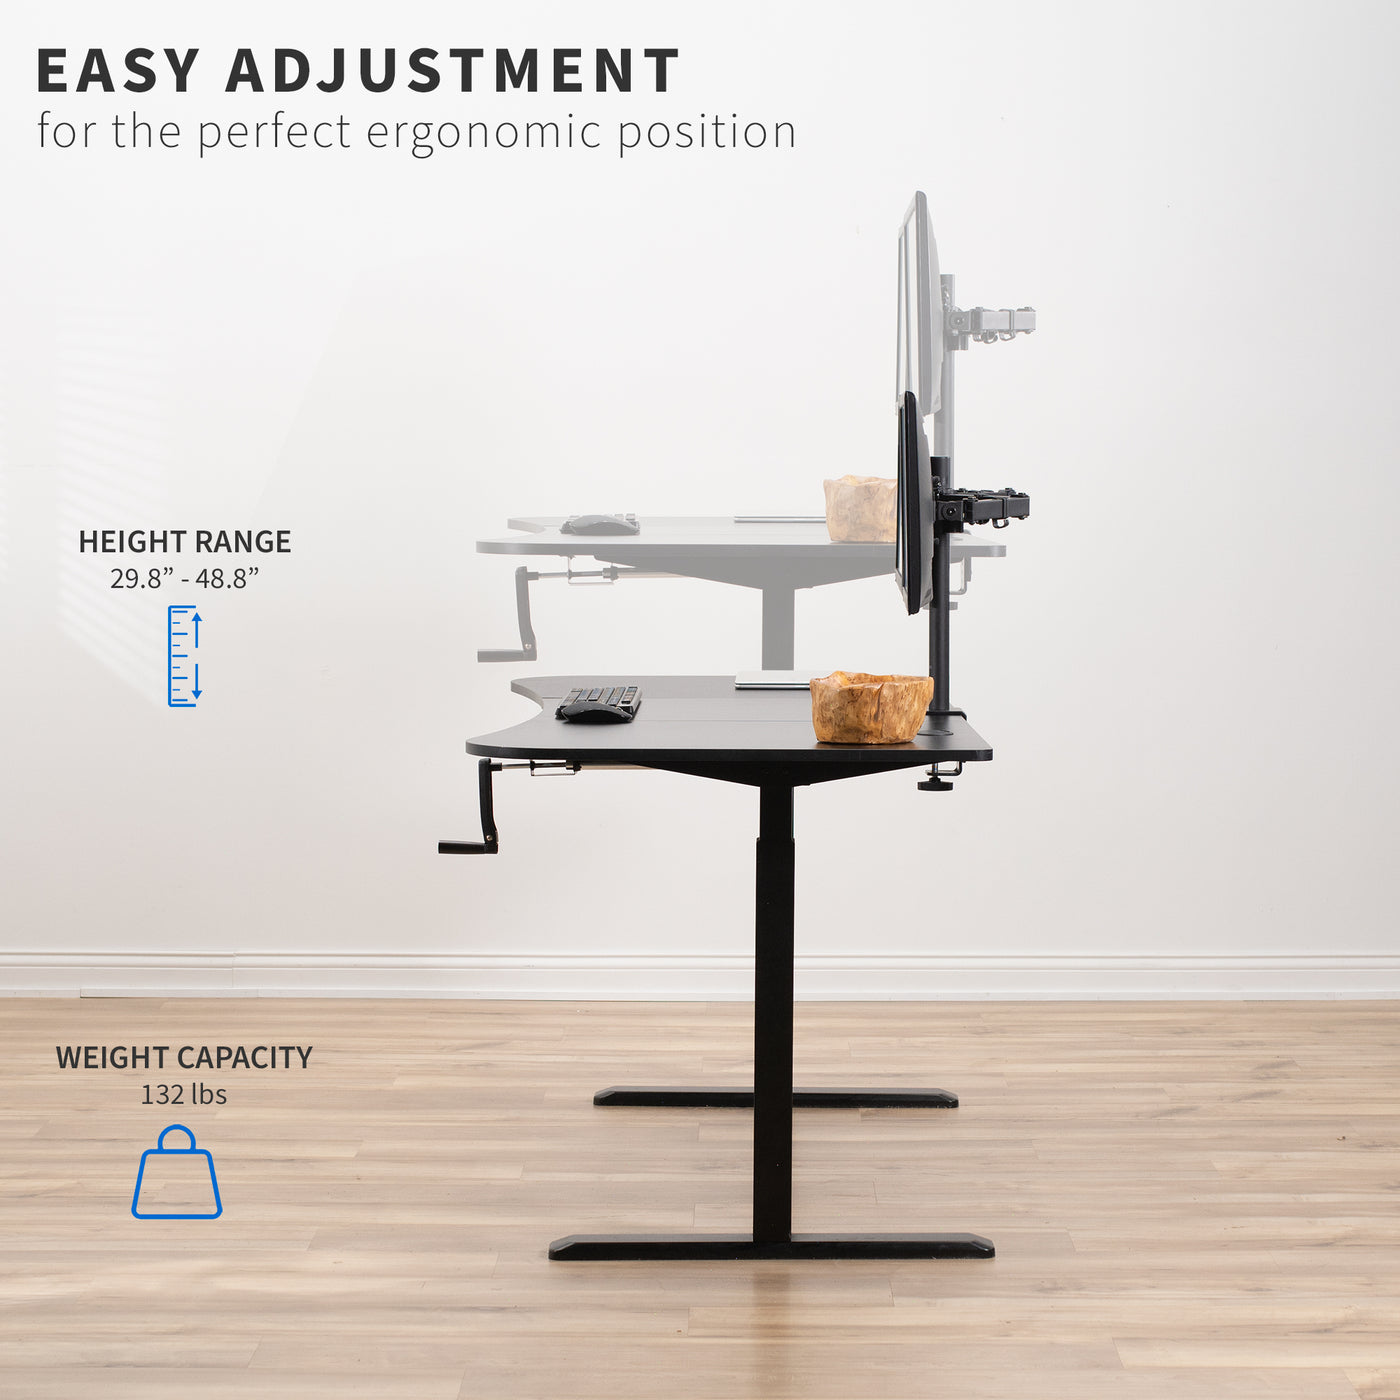 Ergonomic manual hand crank height adjustable desk for sit or stand workstation.